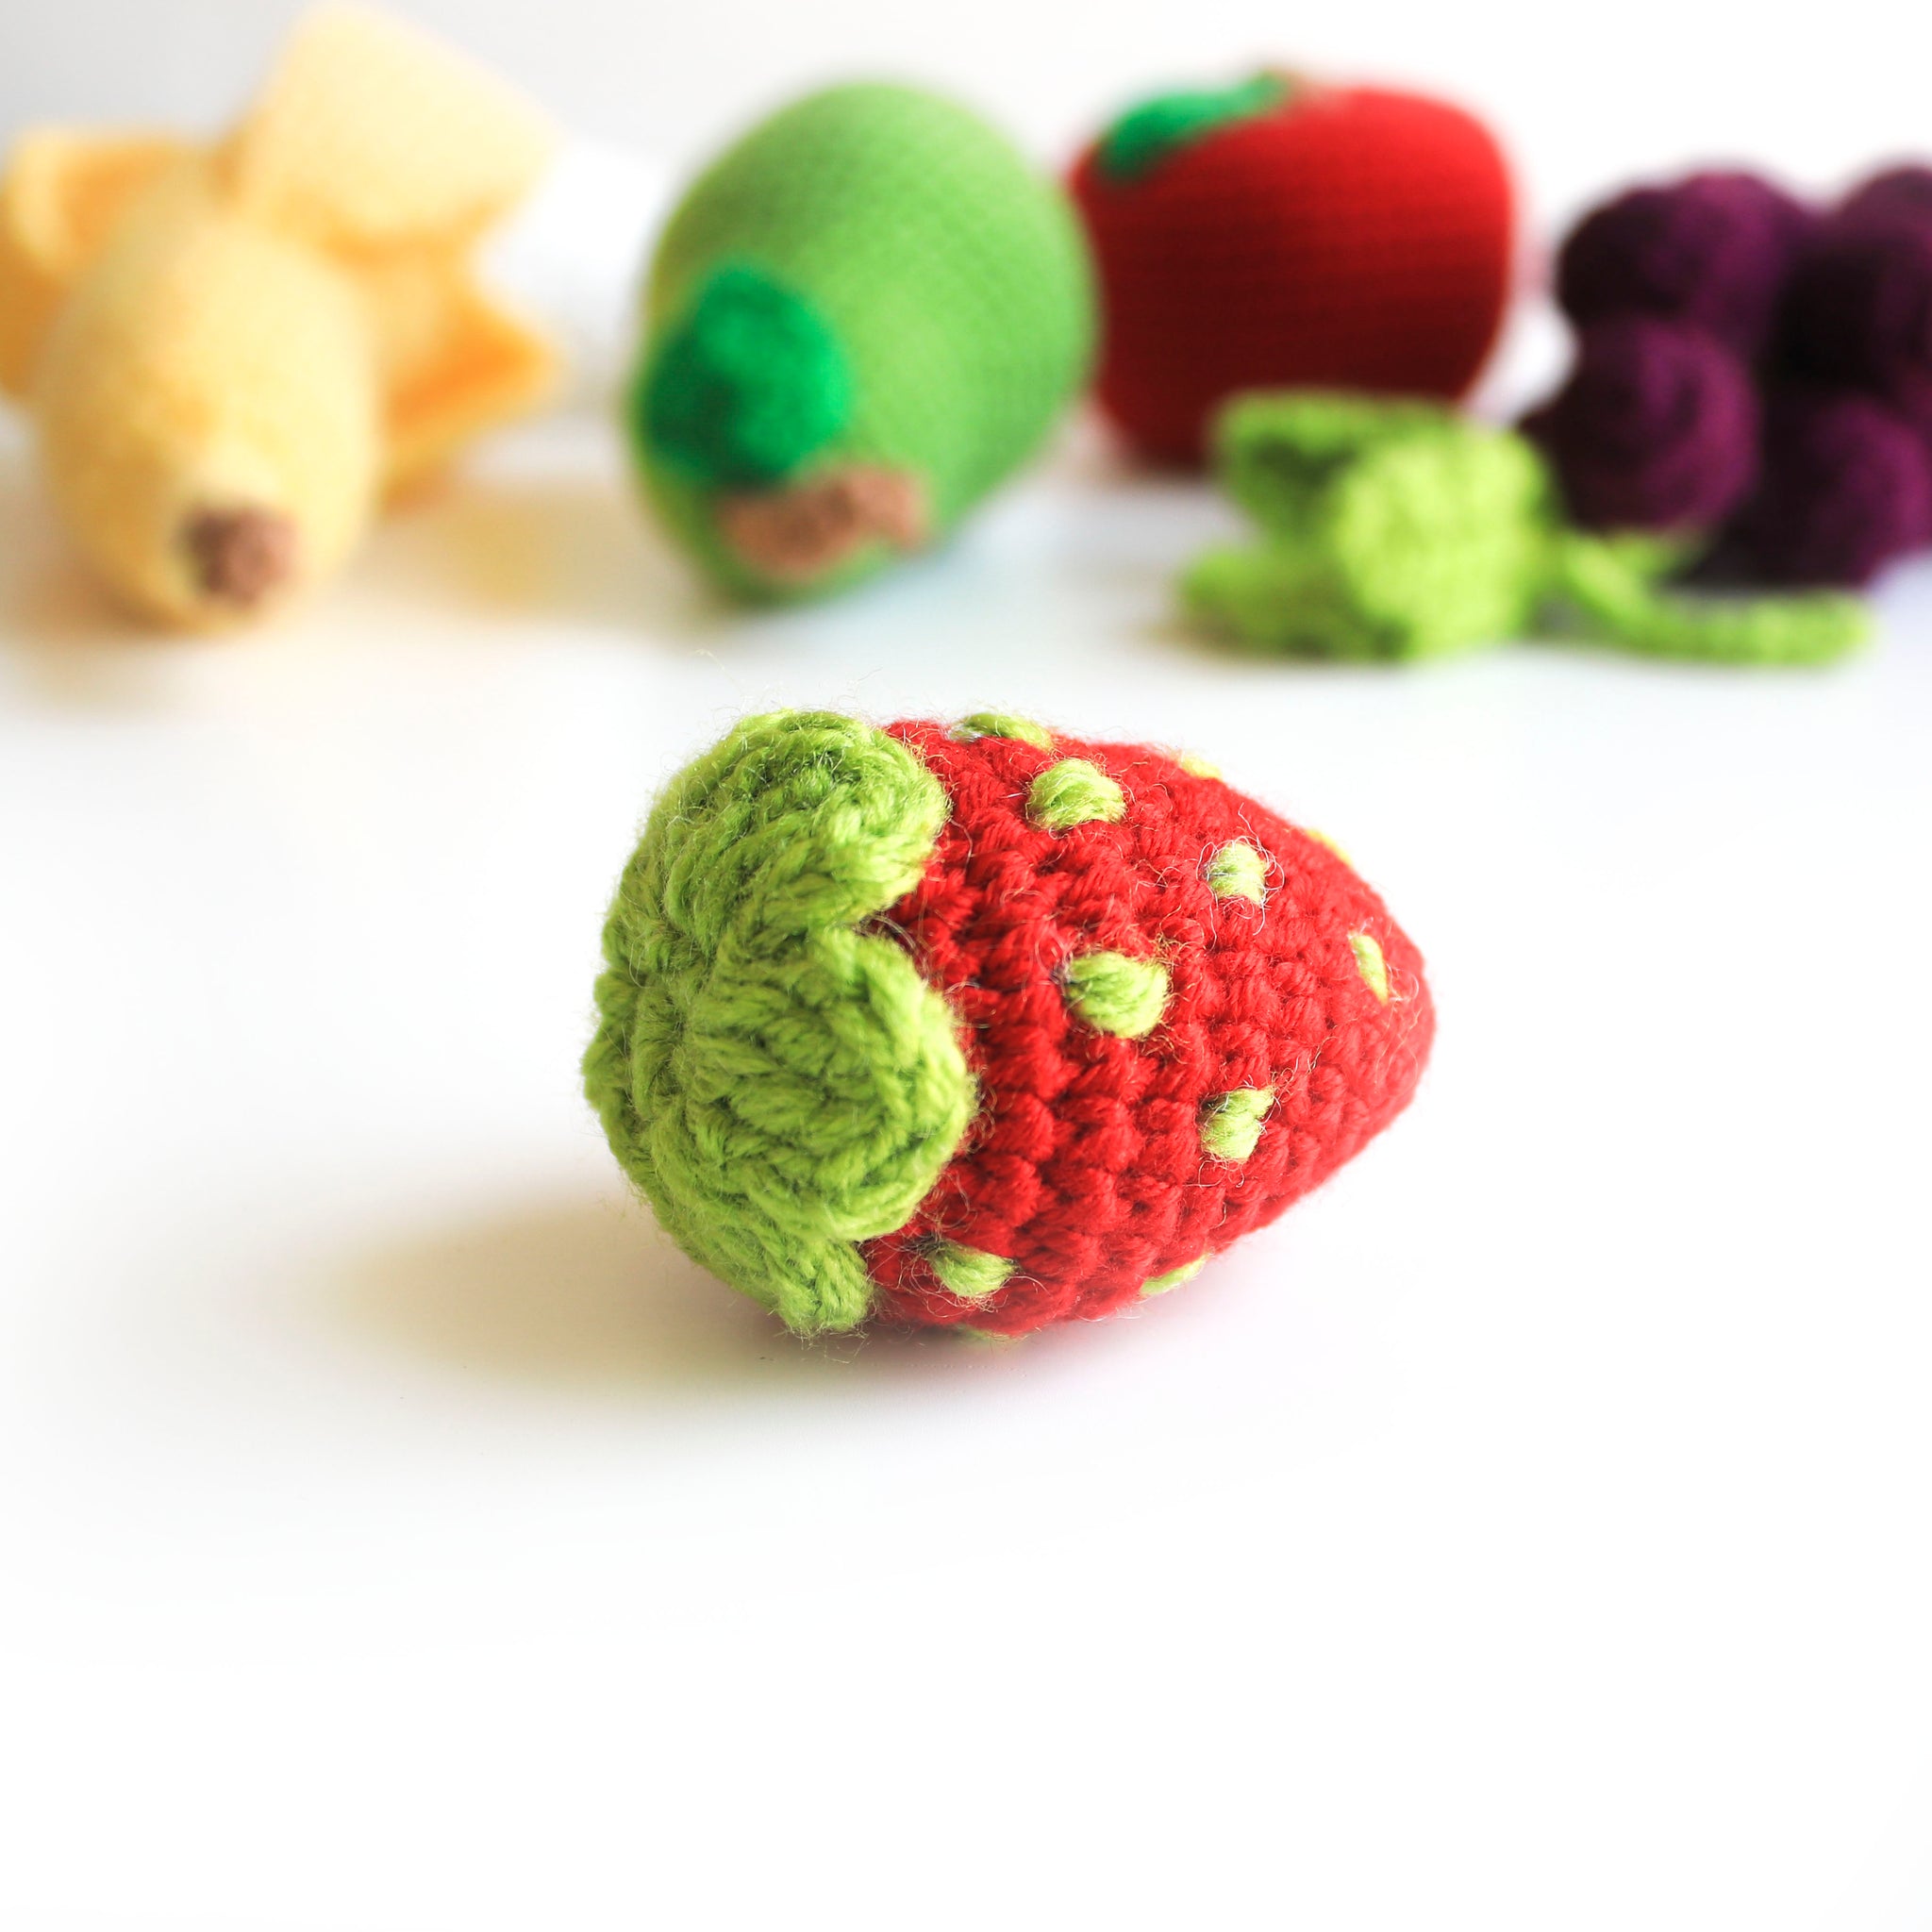 Fruits & Veggies Crochet